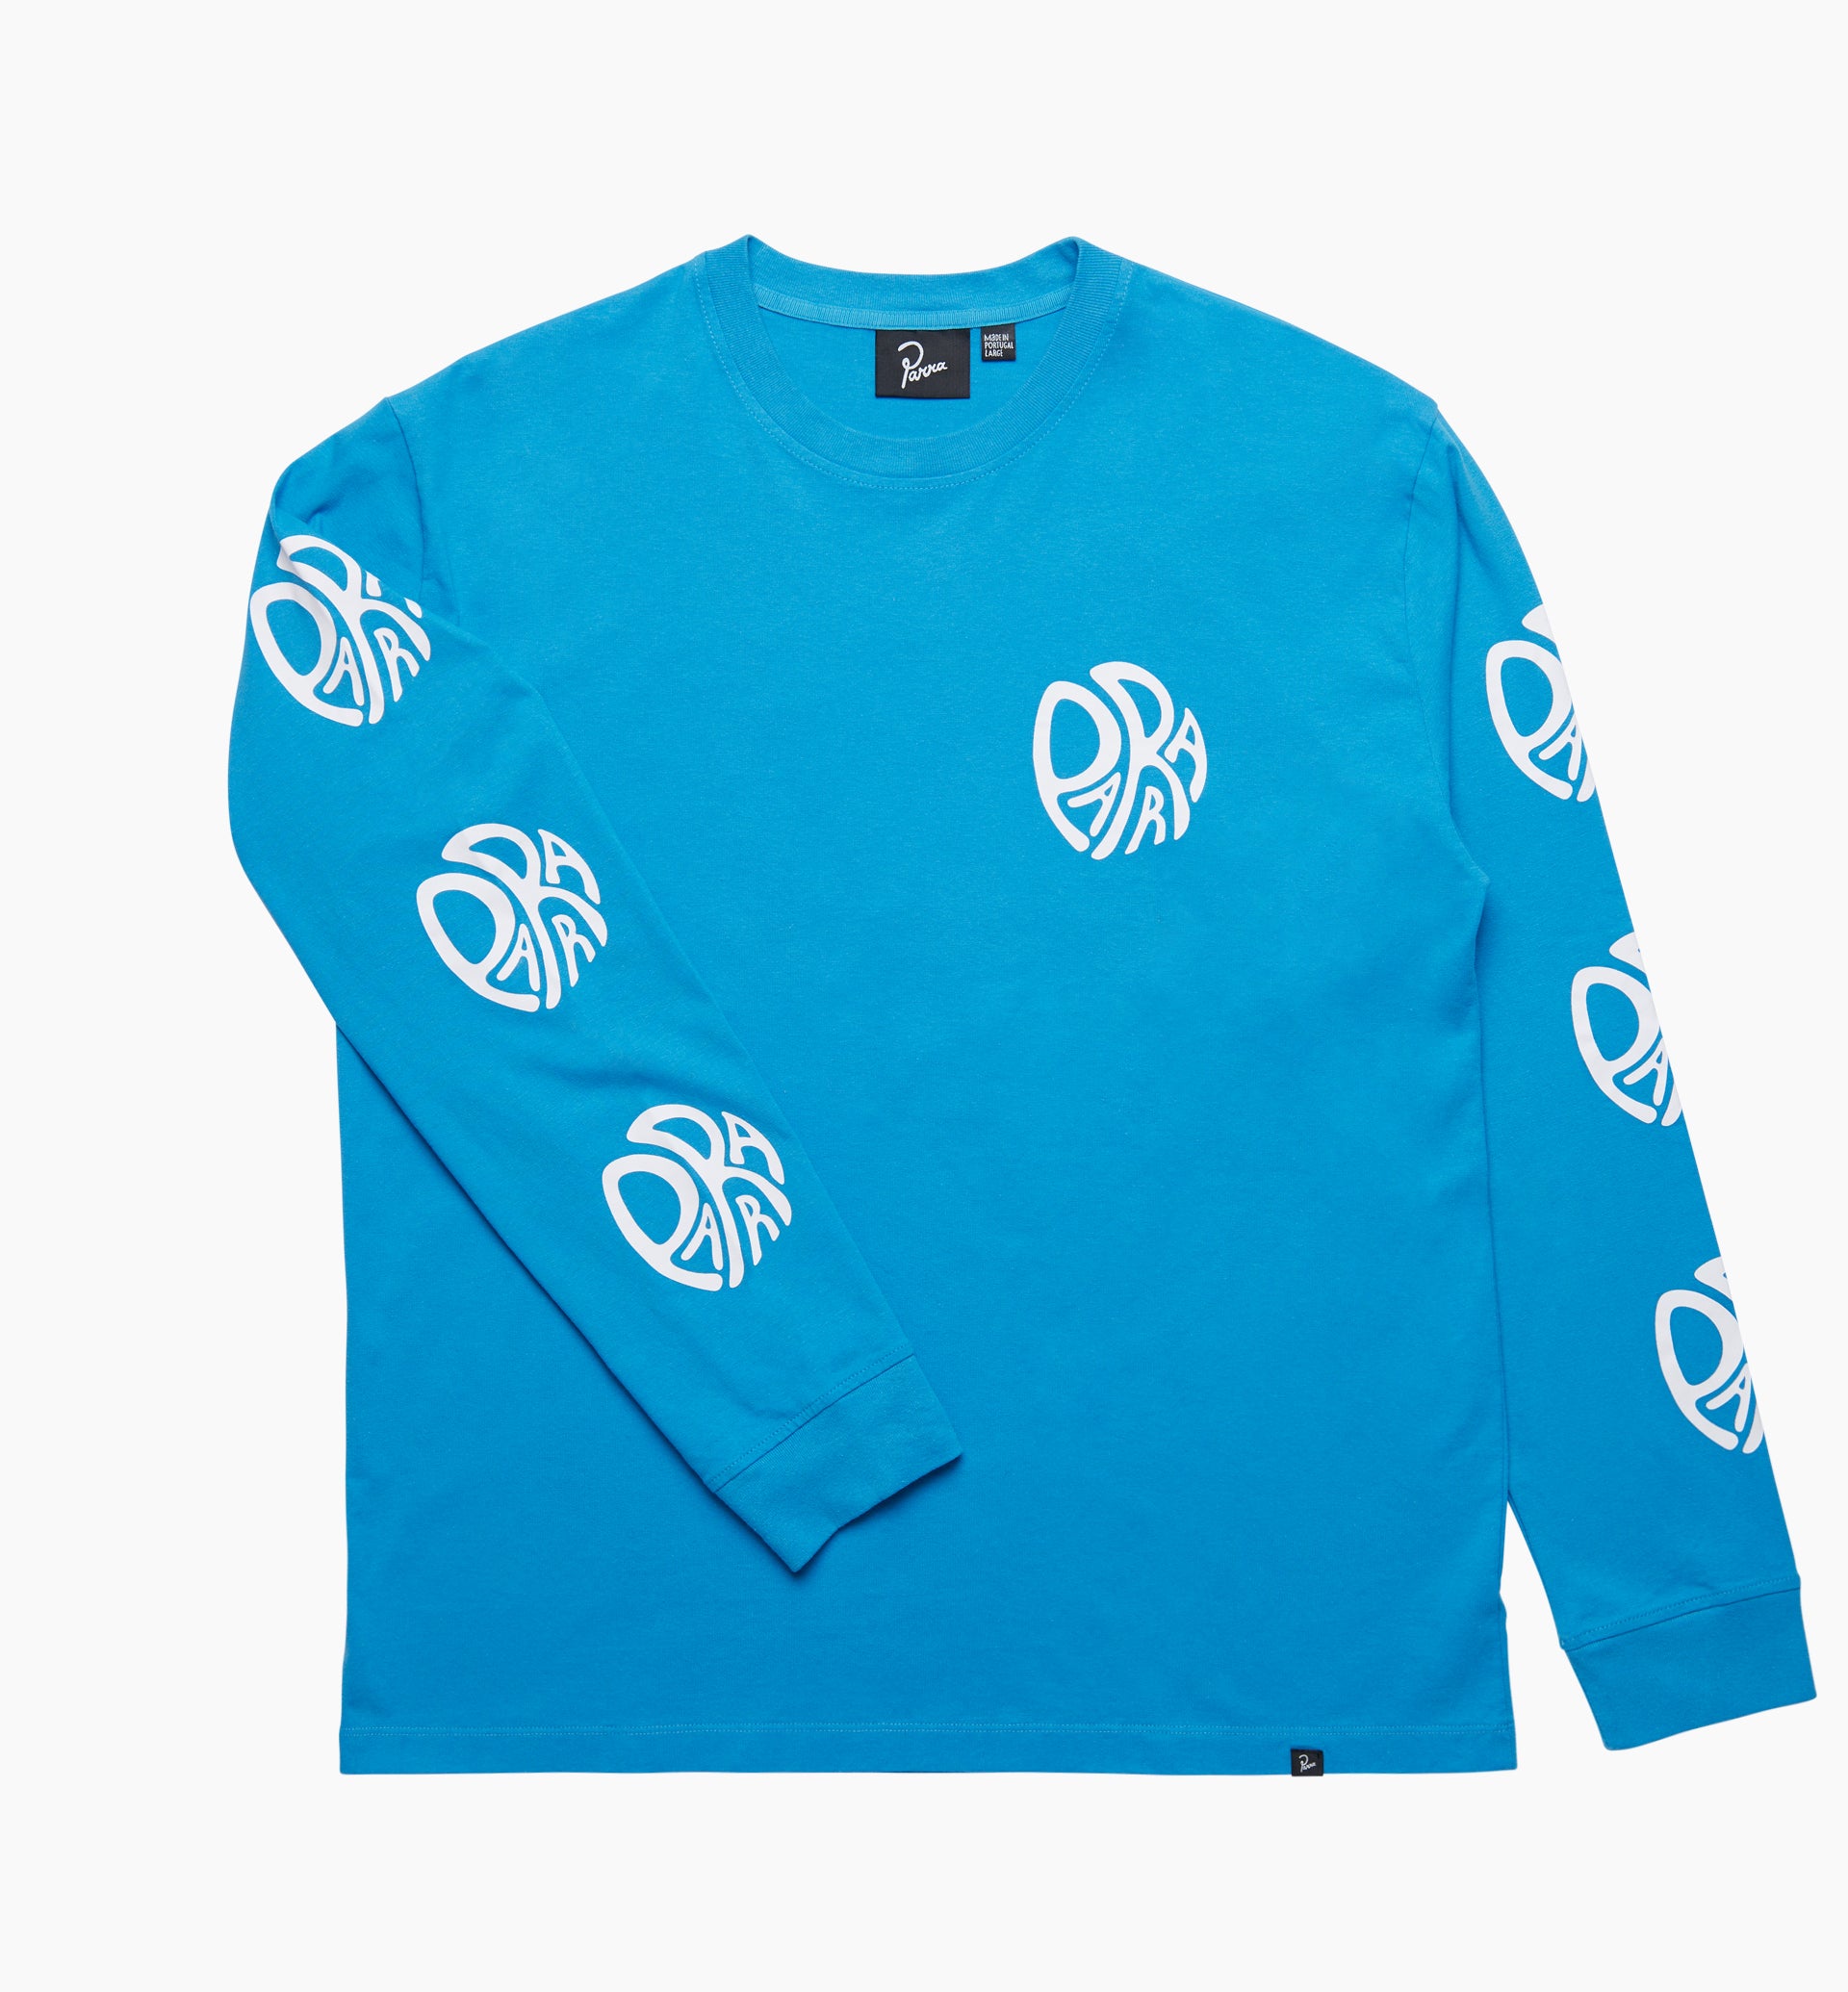 Parra - circle tweak logo long sleeve t-shirt